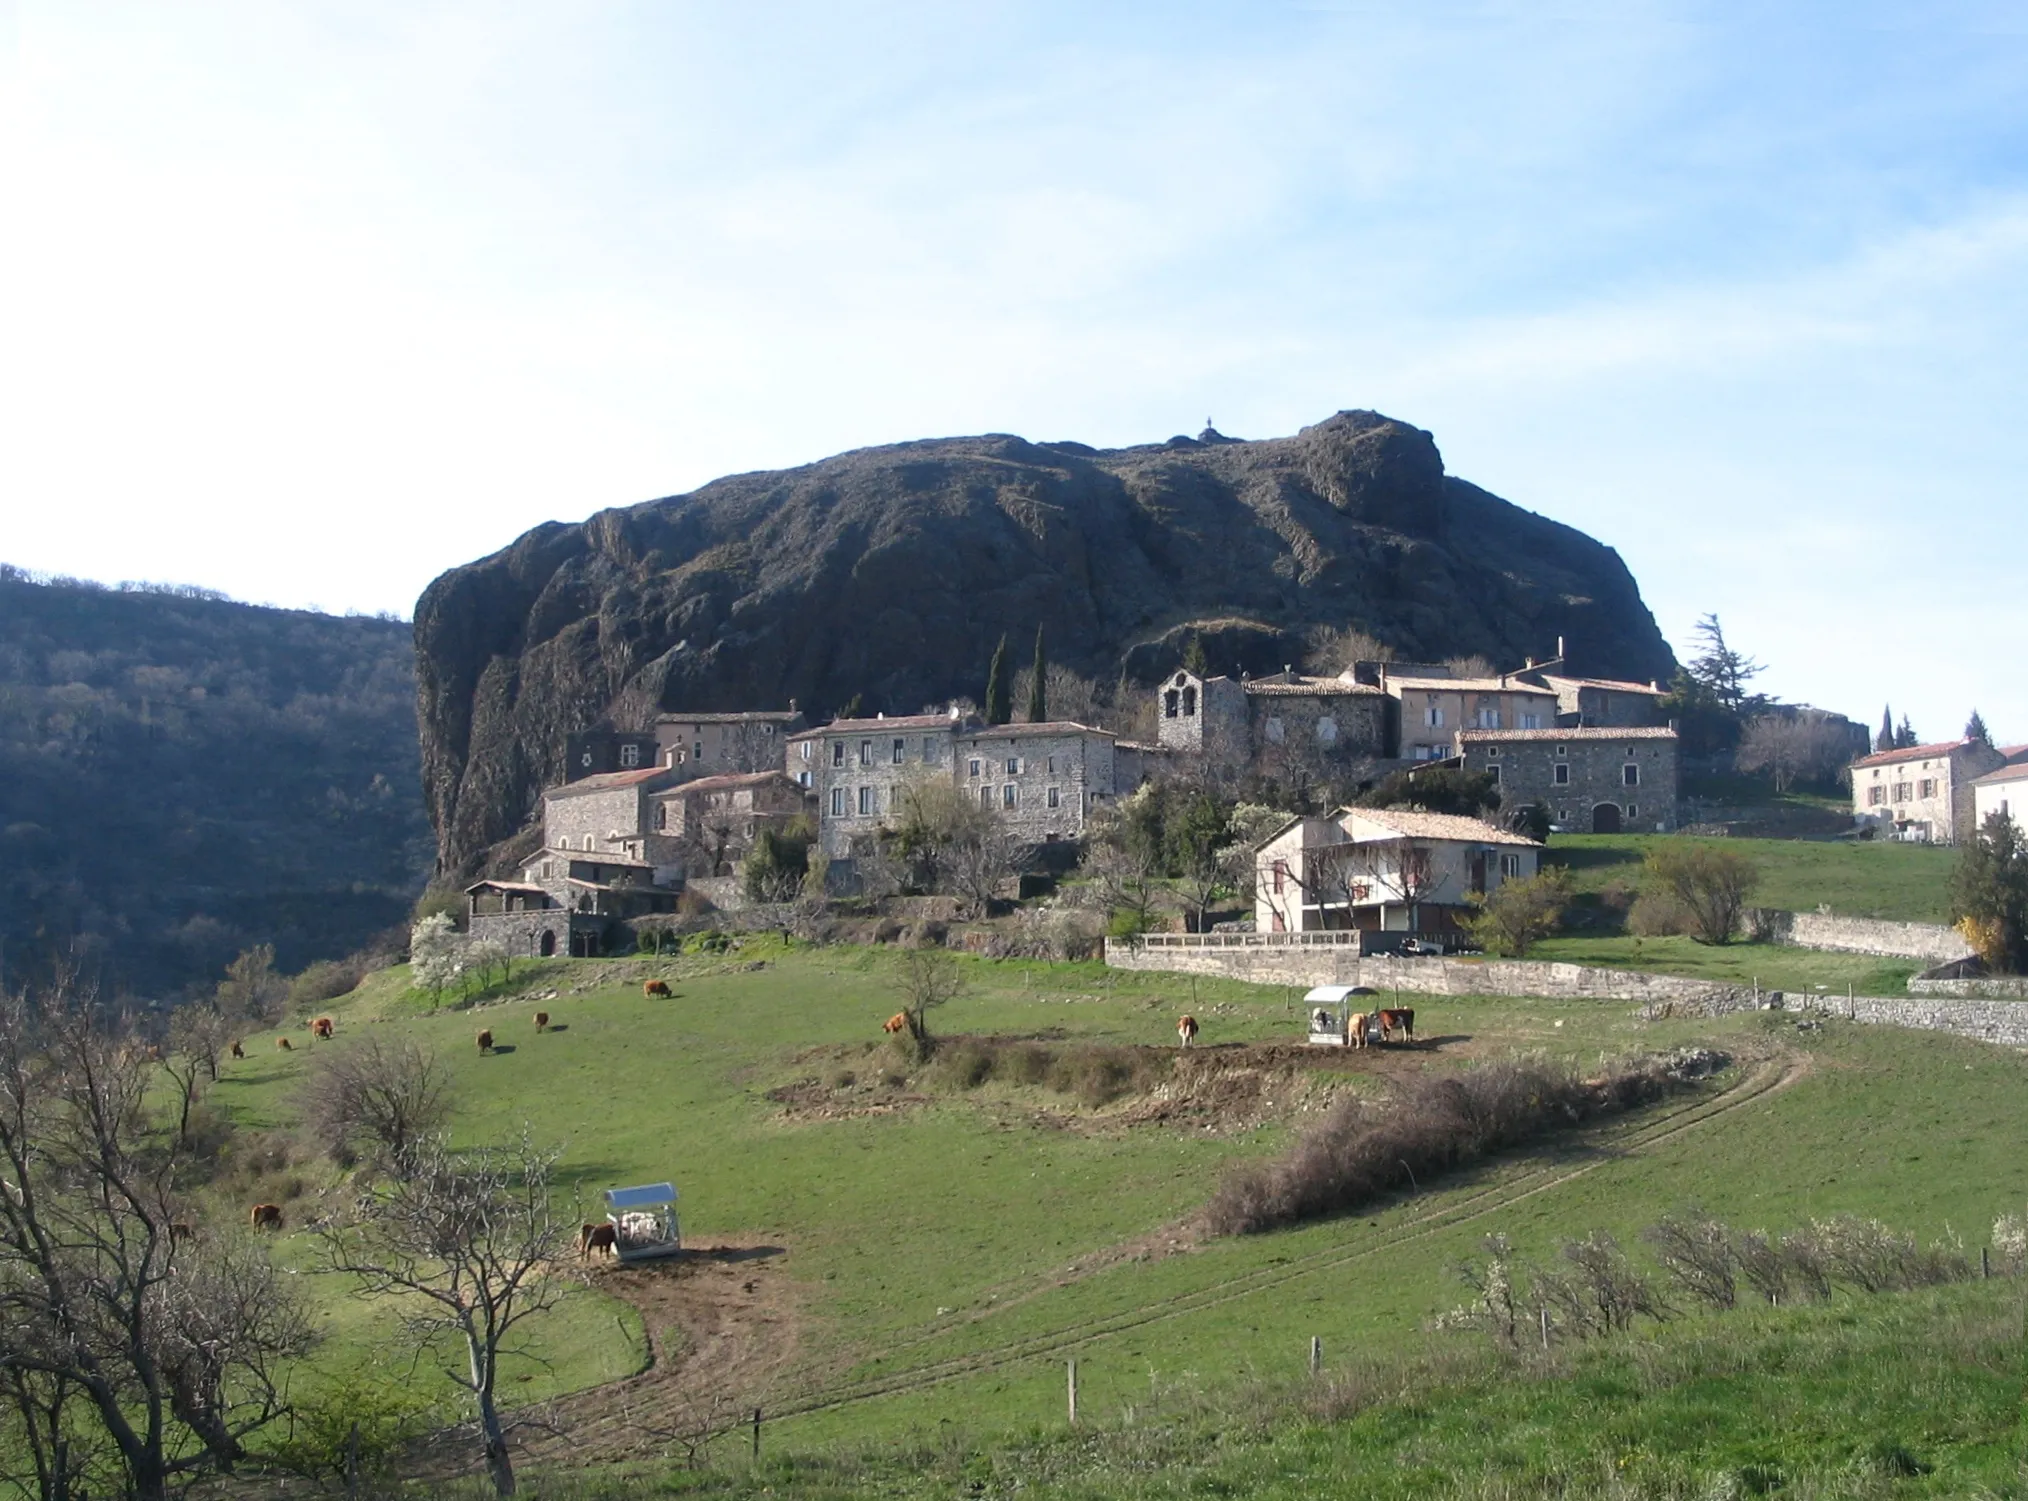 Photo showing: The village of Sceautres, in the département Ardèche, France